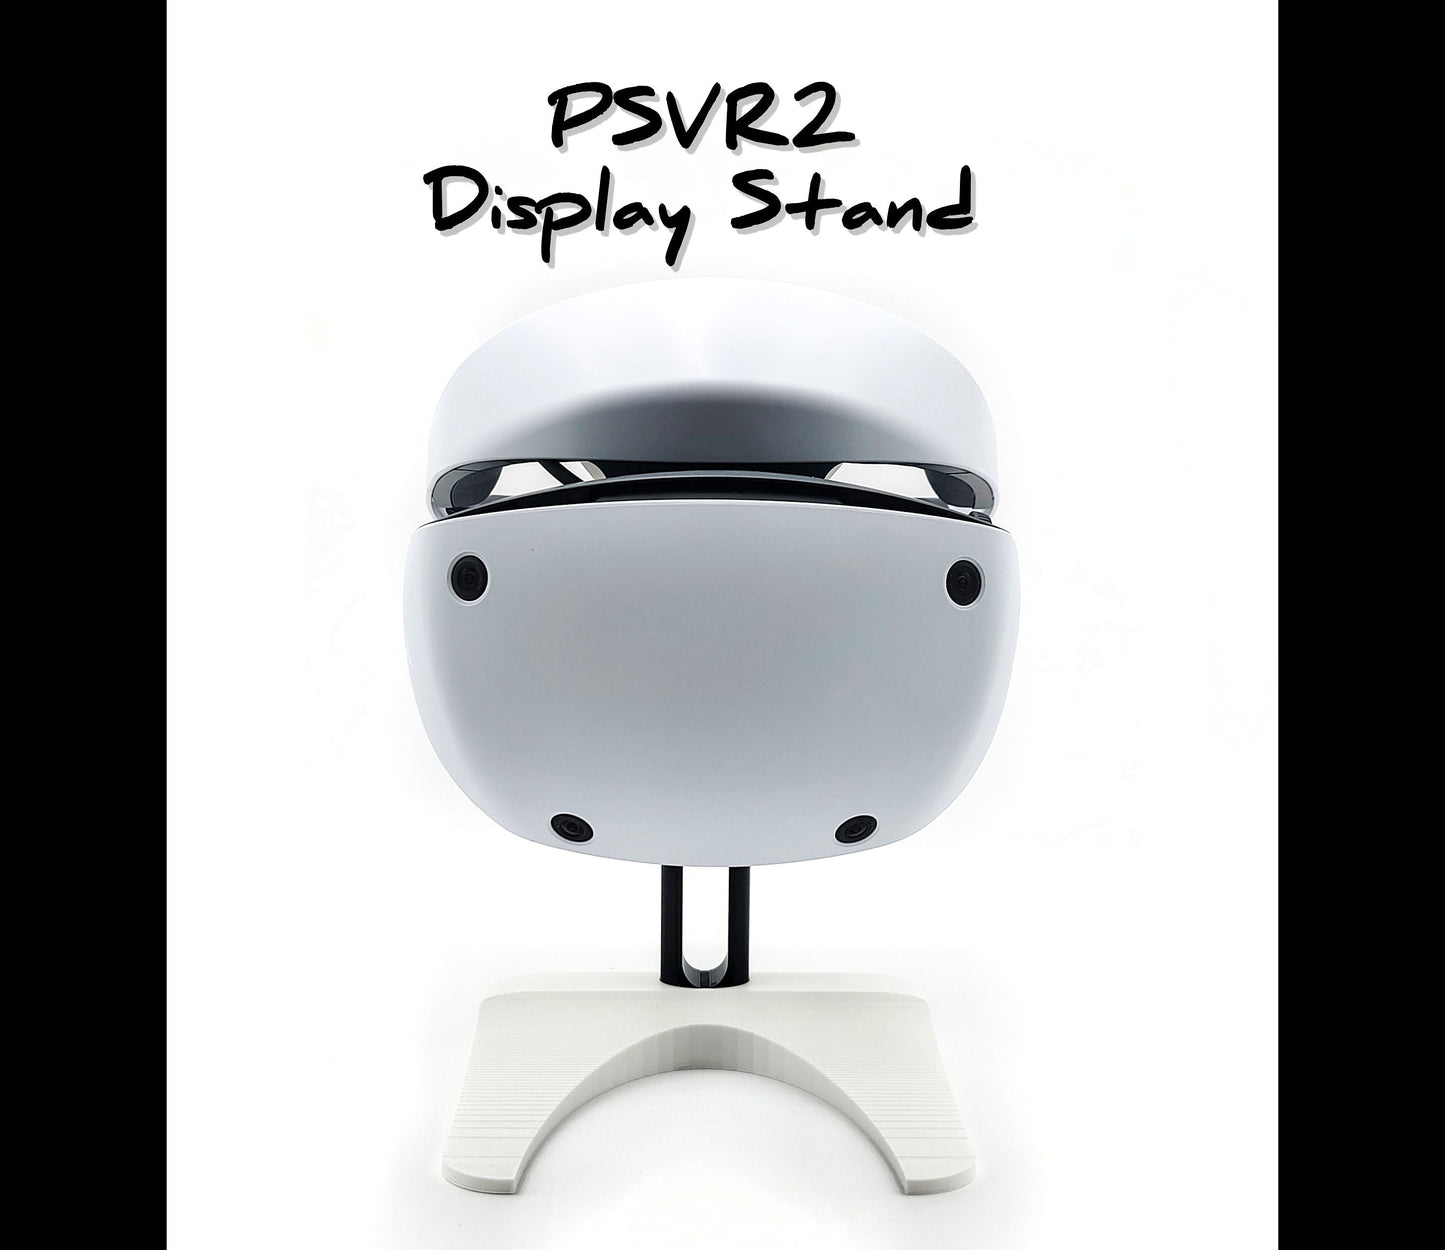 PSVR2 Display Stand